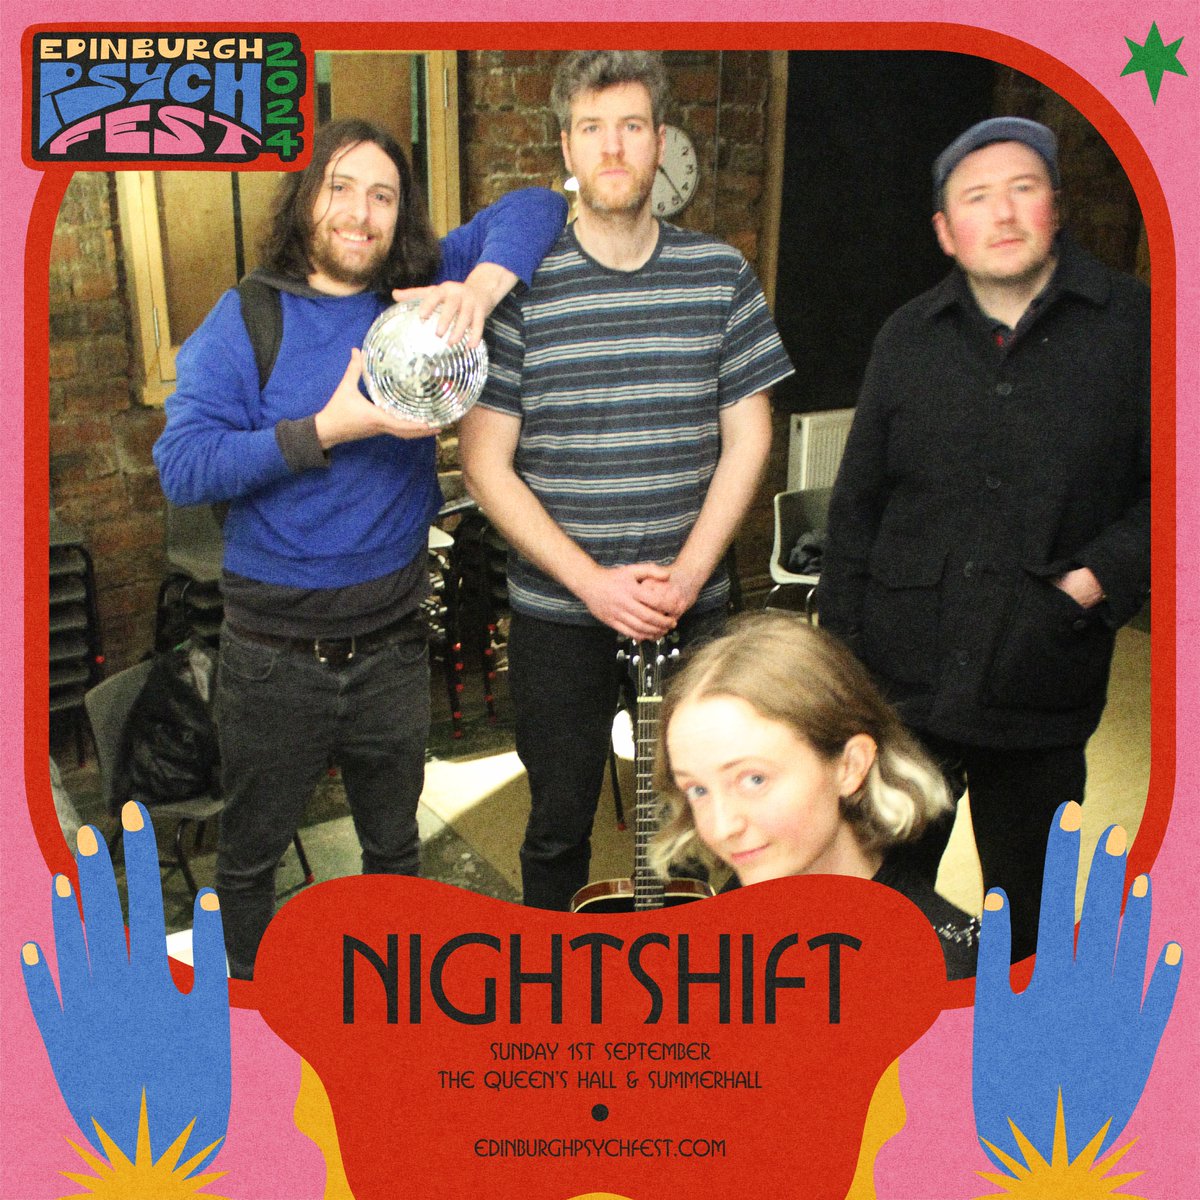 Glasgow's Nightshift bring their lo-fi post-punk sounds to EPF this year! Tickets: edinburghsychfest.com